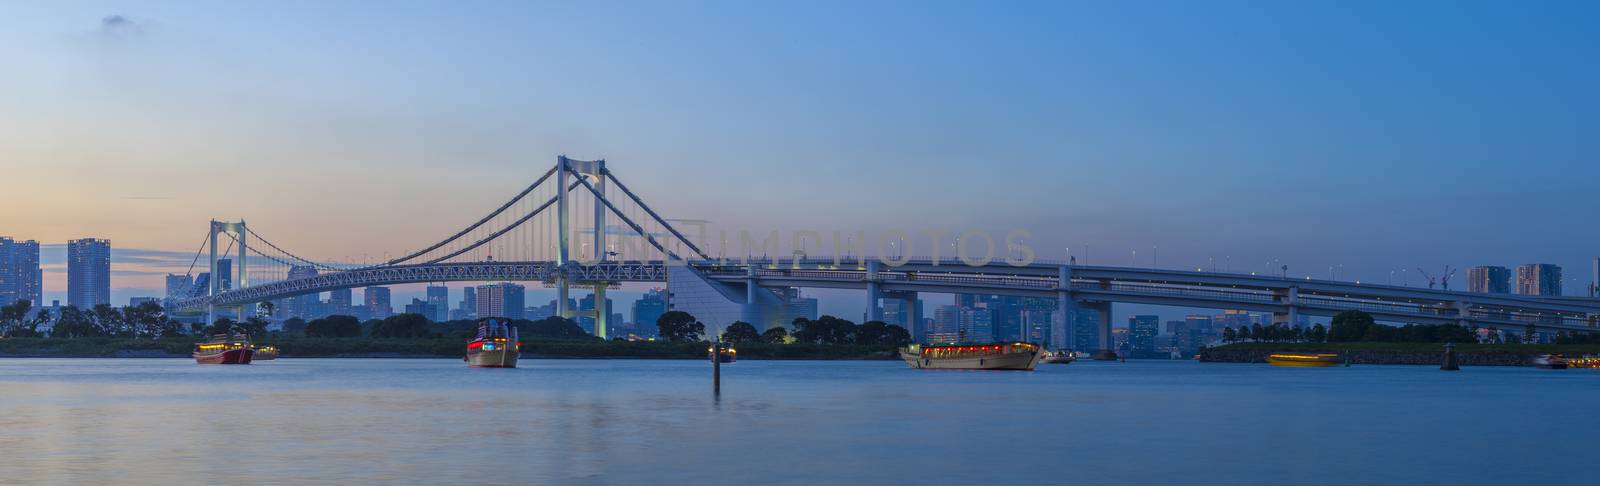 beautiful dusky sky city scape of rainbow bridge important landmark and town transportation in odaiba tokyo japan